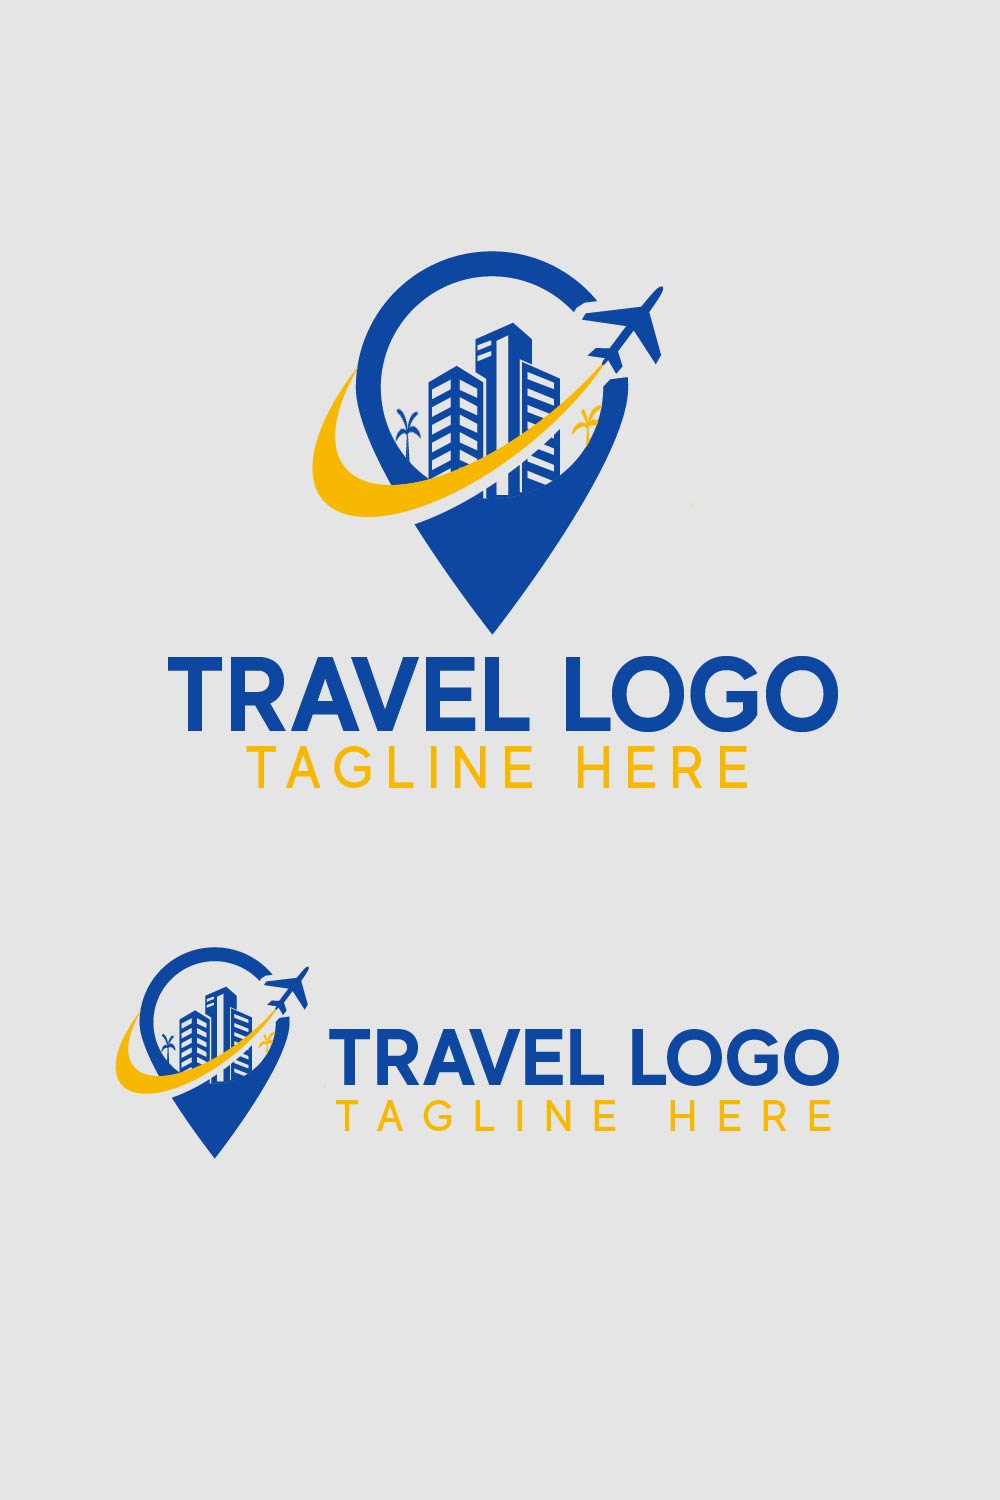 Travel Logo Design Editable AI File pinterest image.